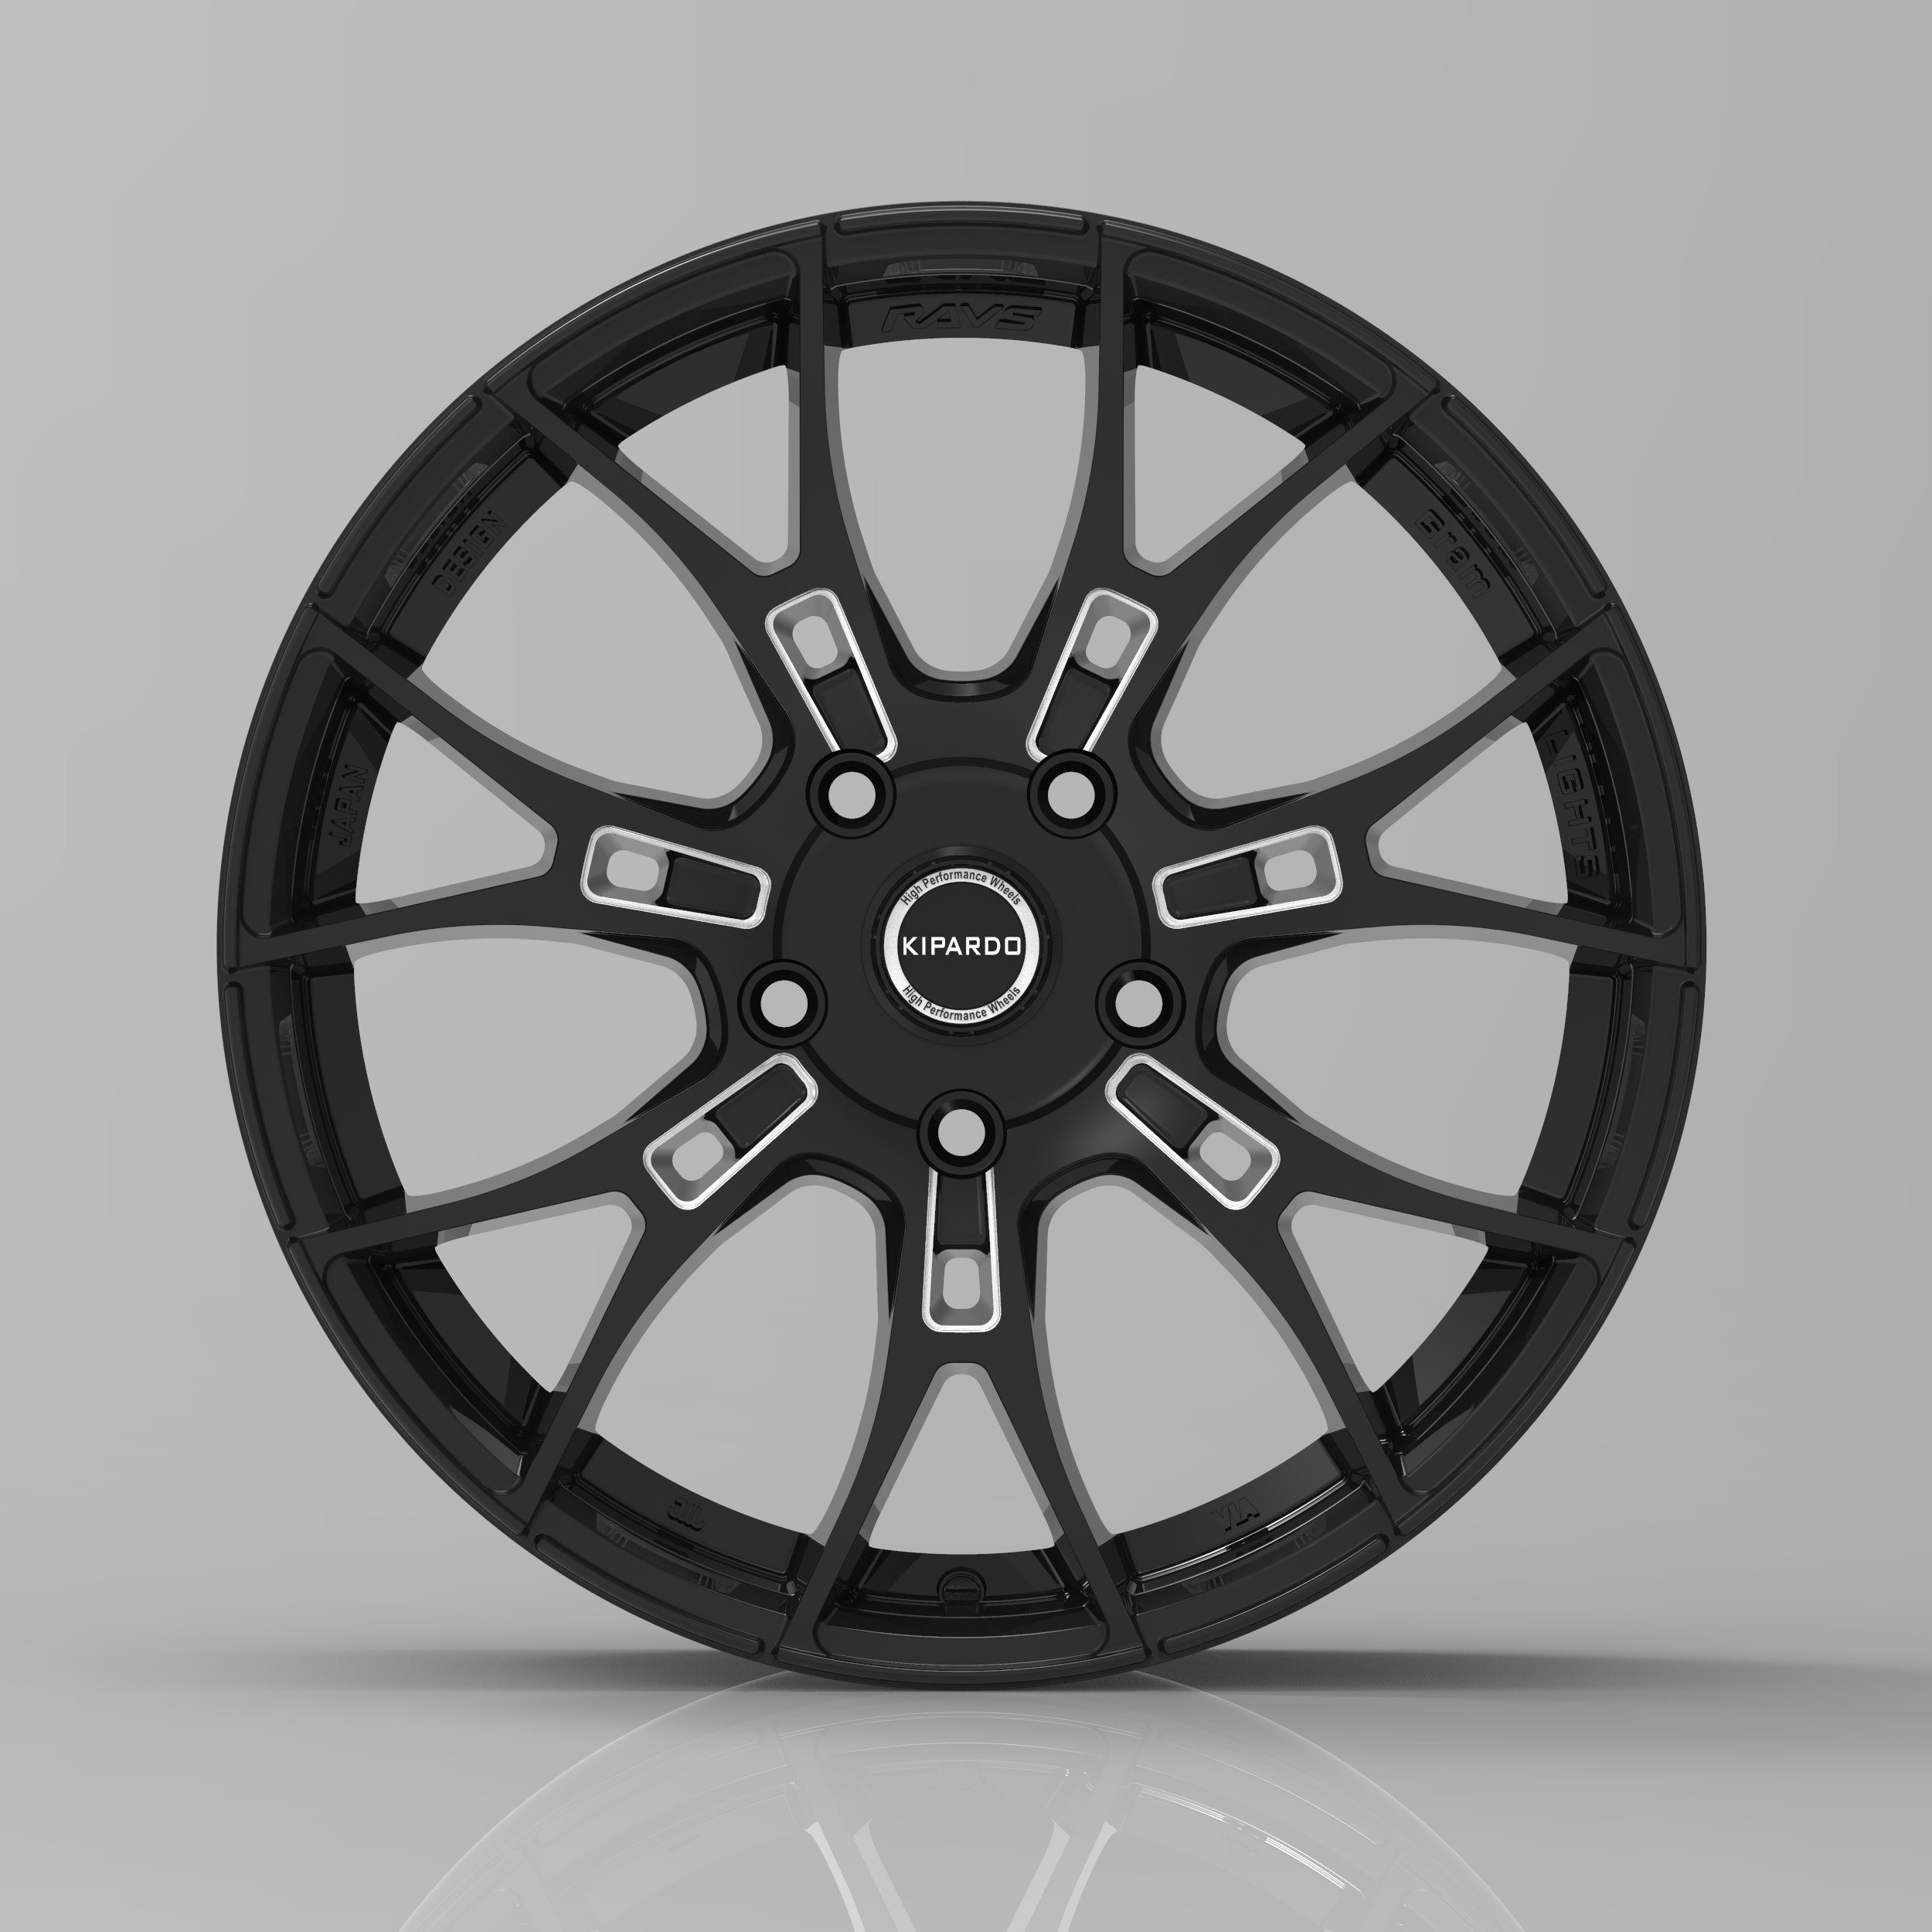 Kipardo 15 17 Inch Sport Rim Alloy Wheel 4 5 Hole 4X100 5X100 5X112 5X114.3 5X120